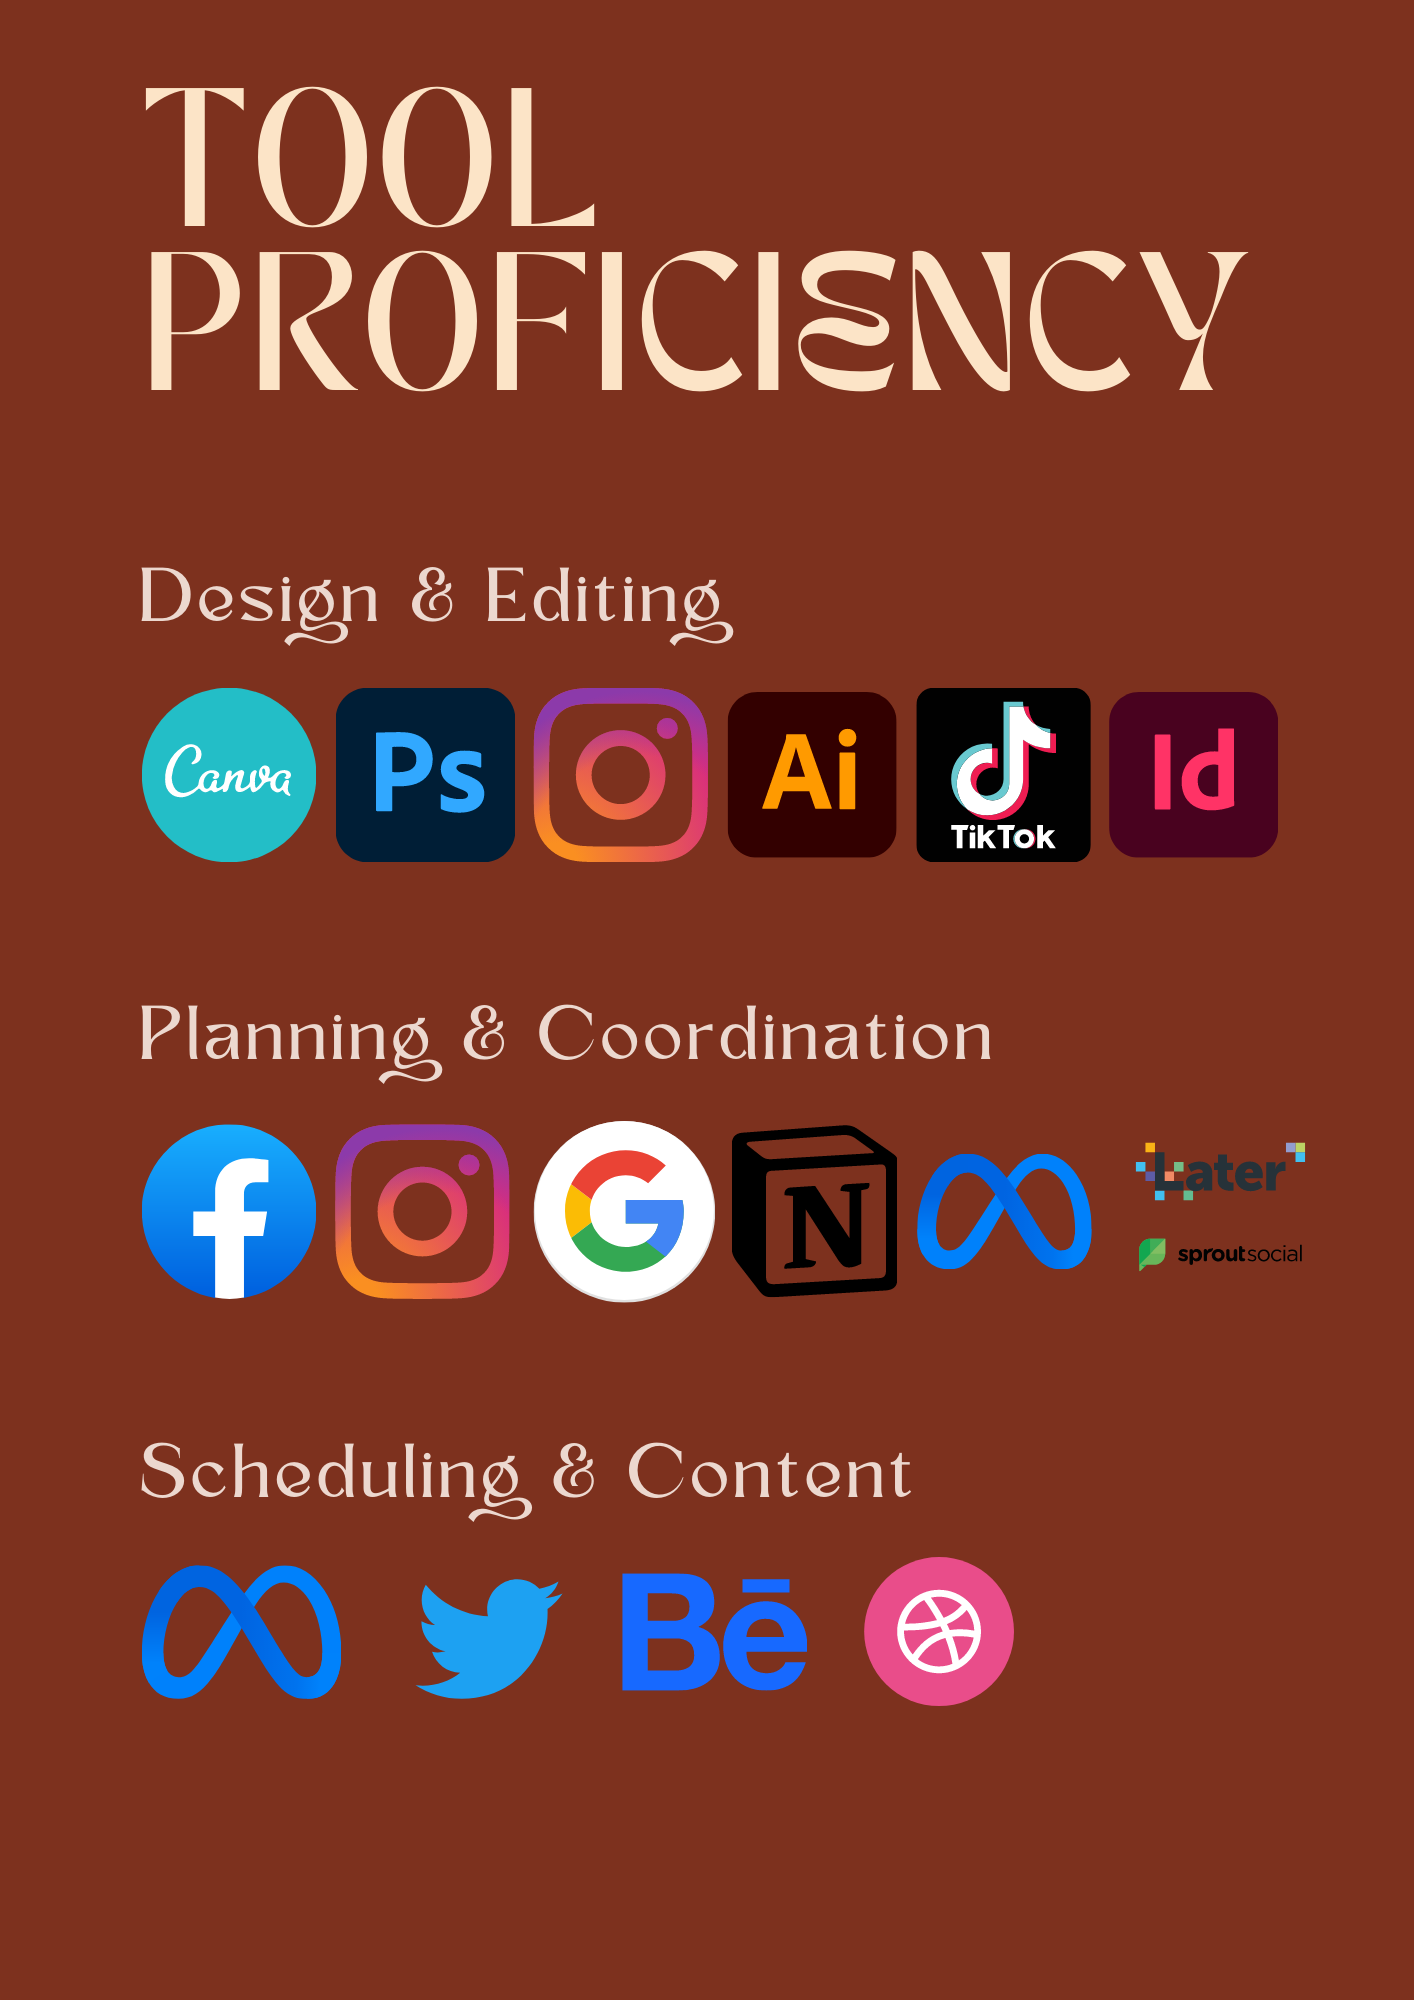 TOOL
PROFICIENCY

Design & Editing,
Gr i
(< Al d

TikTok

Planning & Coordination

ASIC,

Scheduling, & Content

7